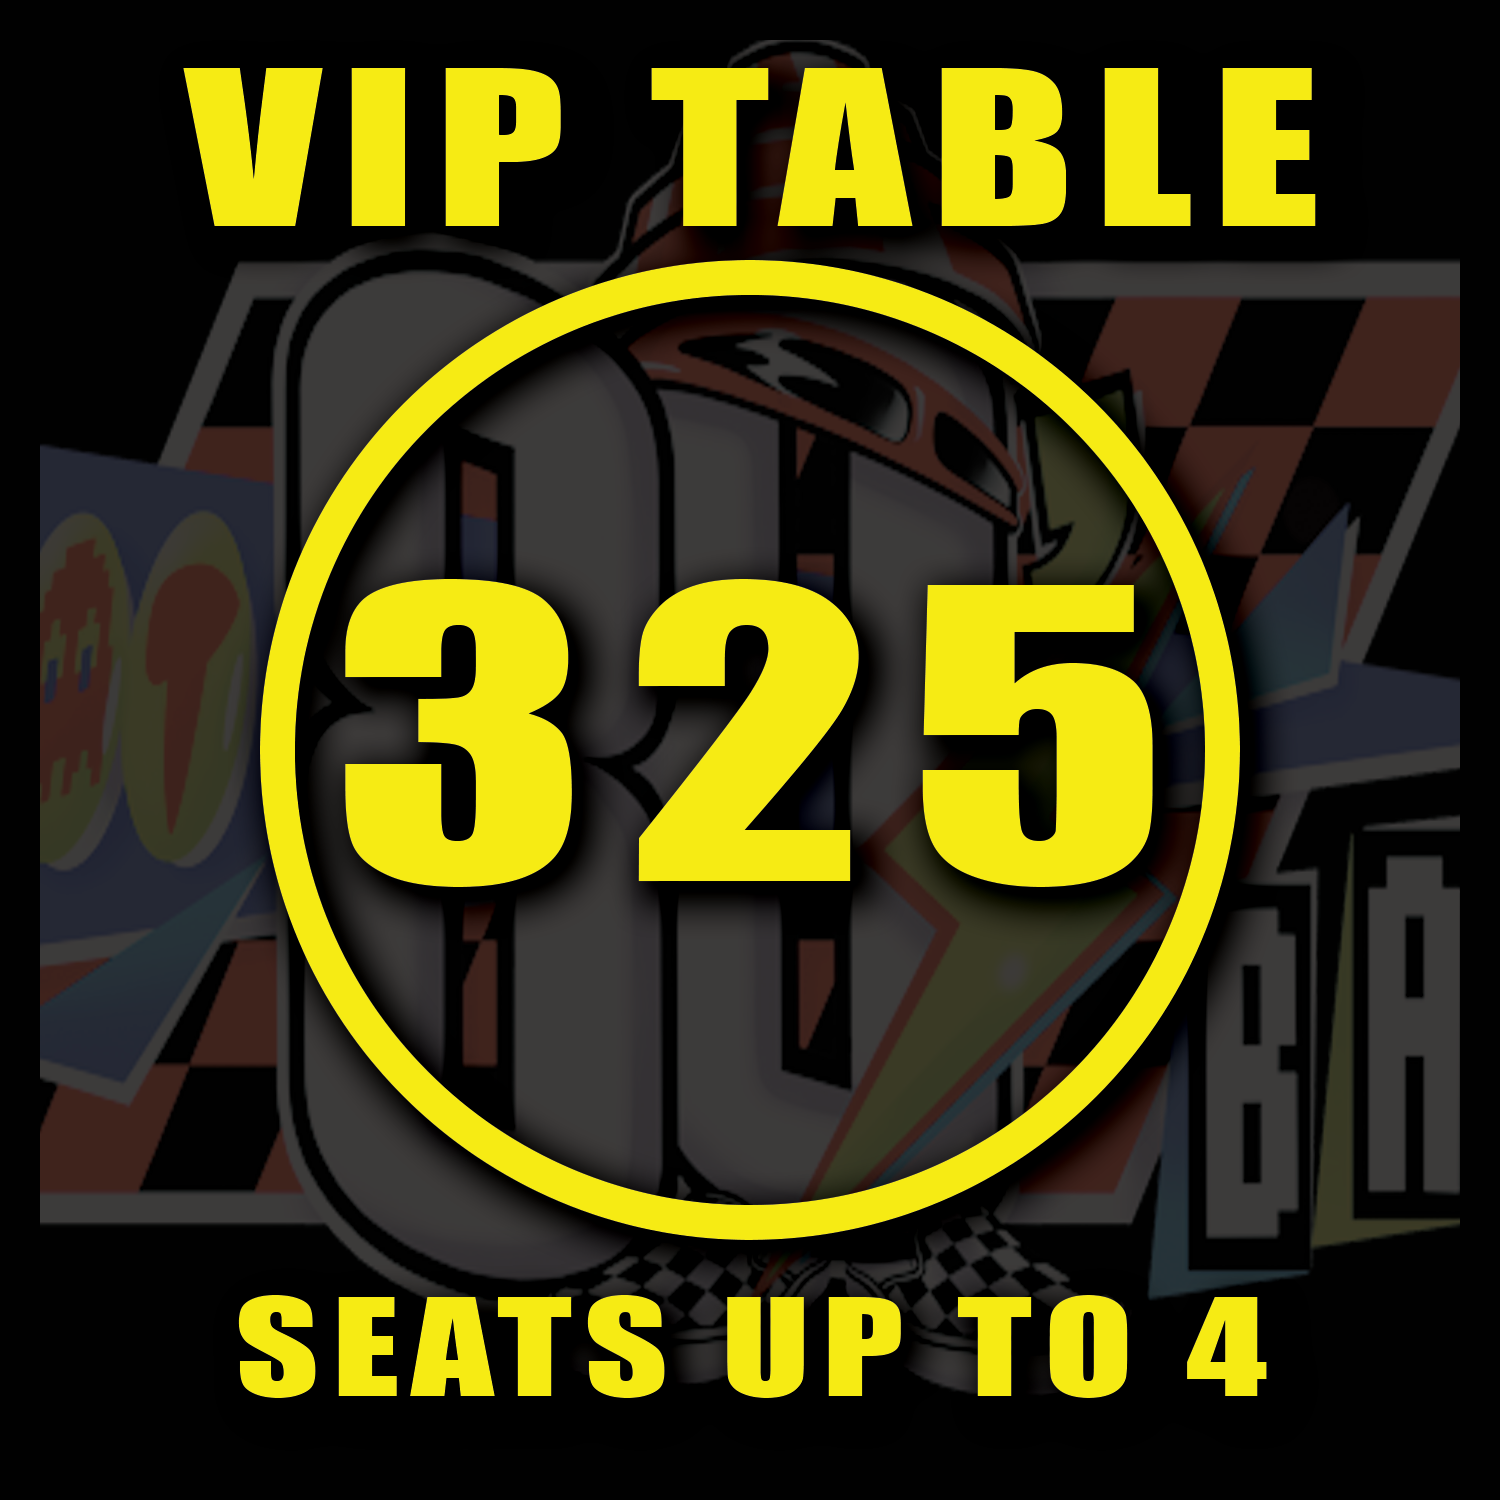 VIP TABLE 325